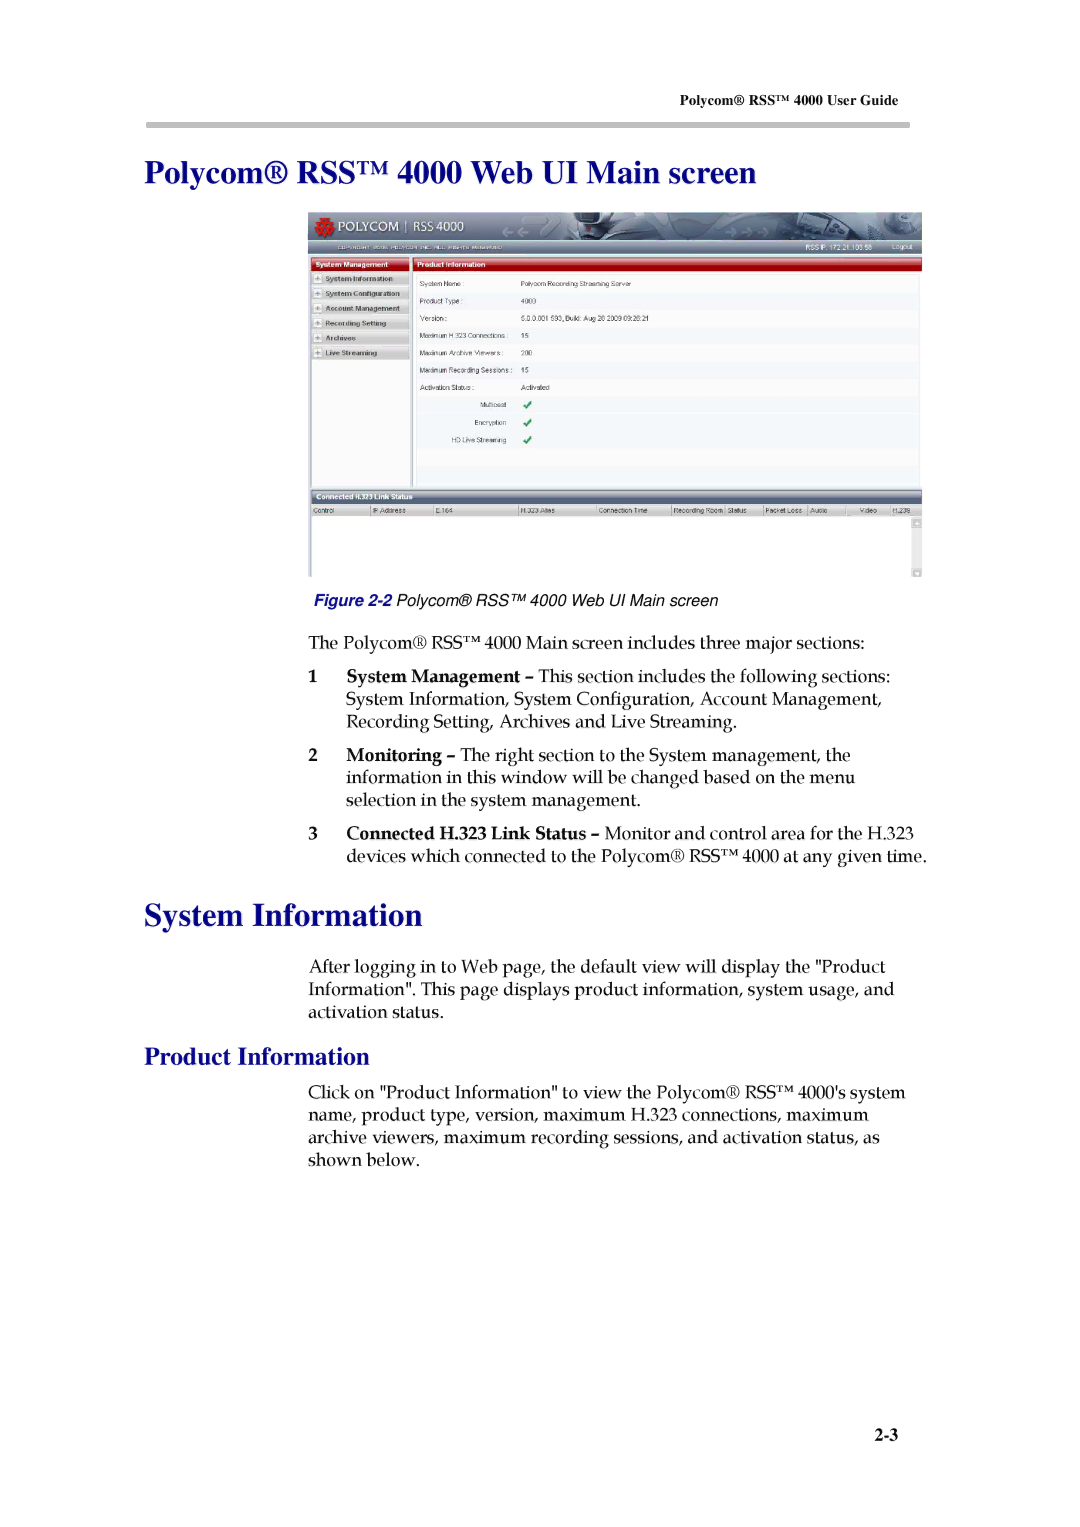 Polycom 3150-30828-001 manual Polycom RSS 4000 Web UI Main screen, System Information, Product Information 